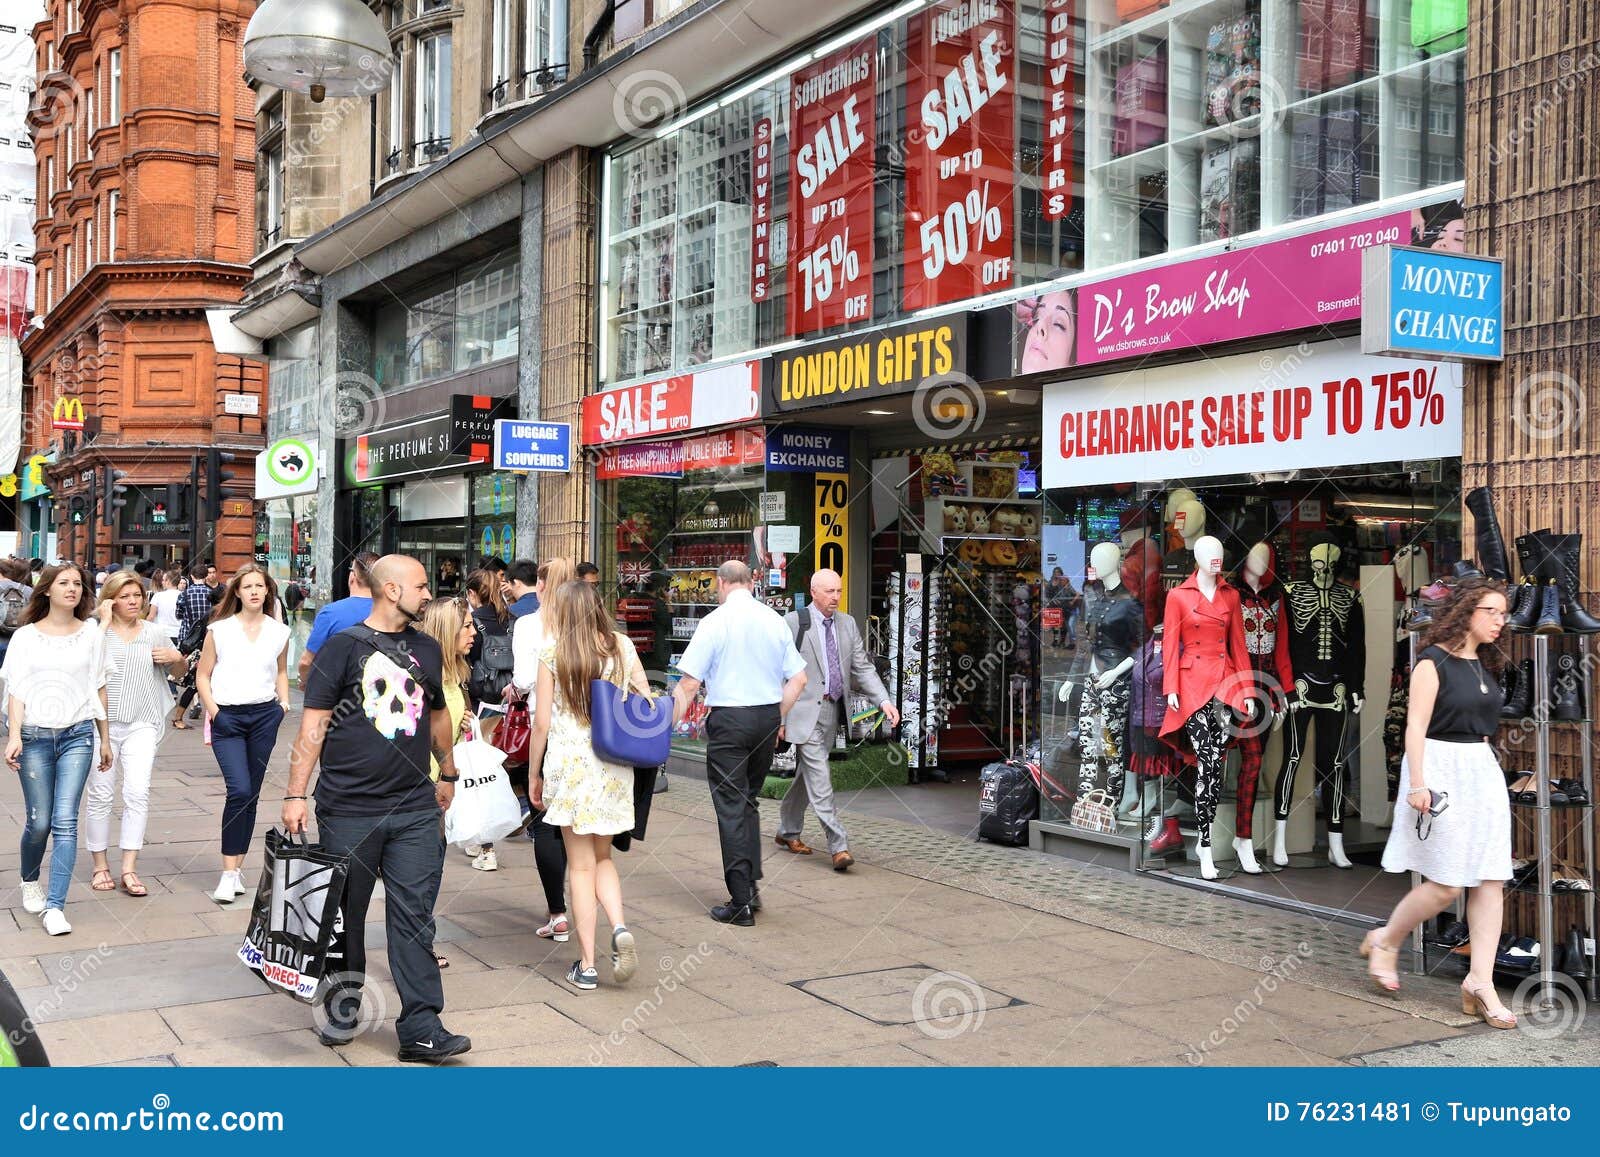 Oxford street shops. Оксфорд стрит магазины. Oxford Street London shops. Магазины на оксфордской улице. London shopping Oxford Street.